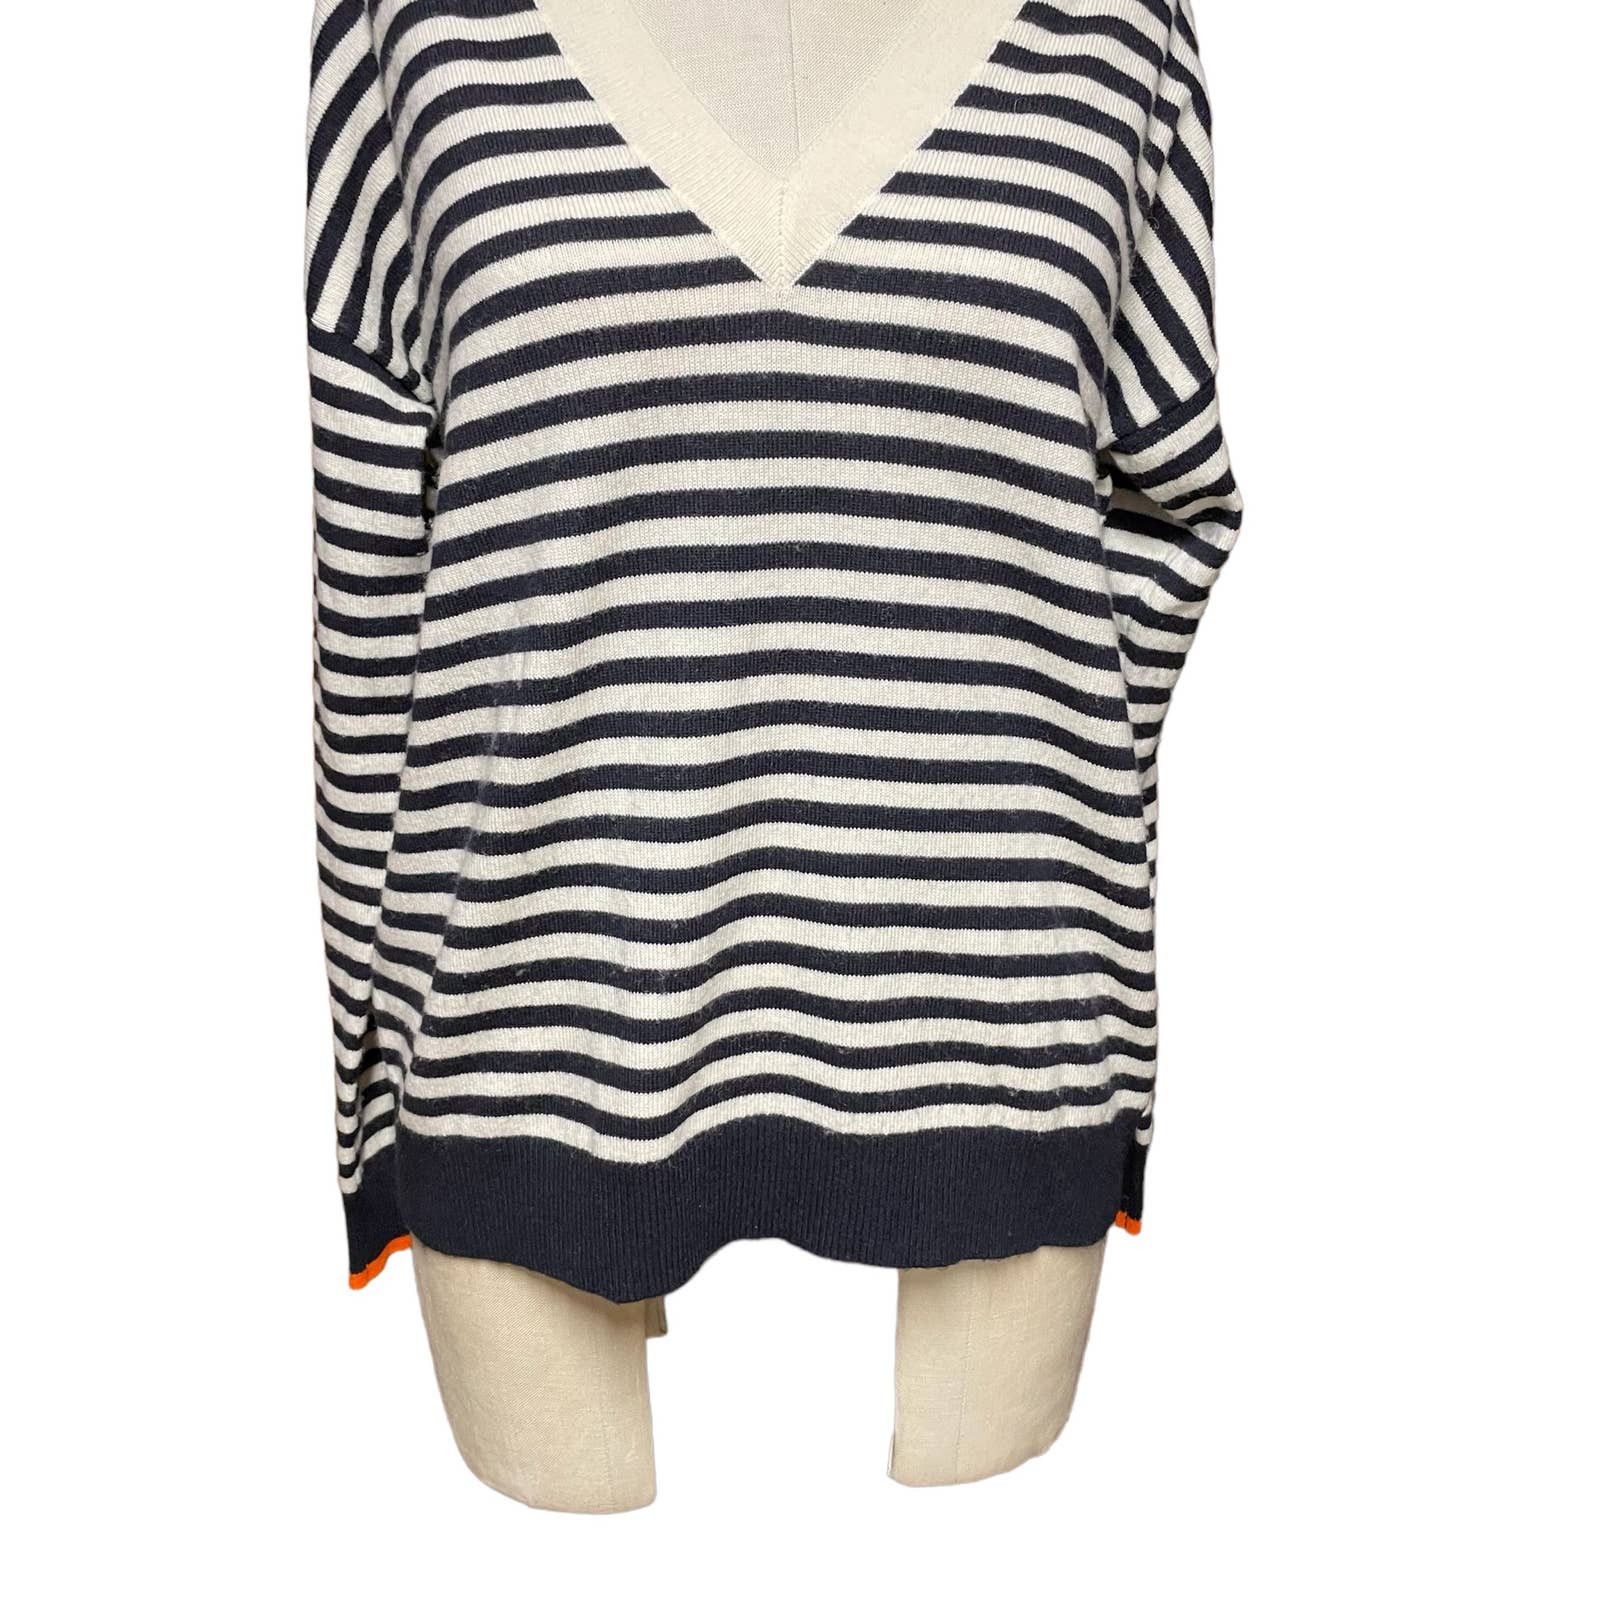 Chinti and Parker Chinti & Parker Navy Blue Cream Stripe Wool Cashmere Sweater Size M / US 6-8 / IT 42-44 - 3 Thumbnail